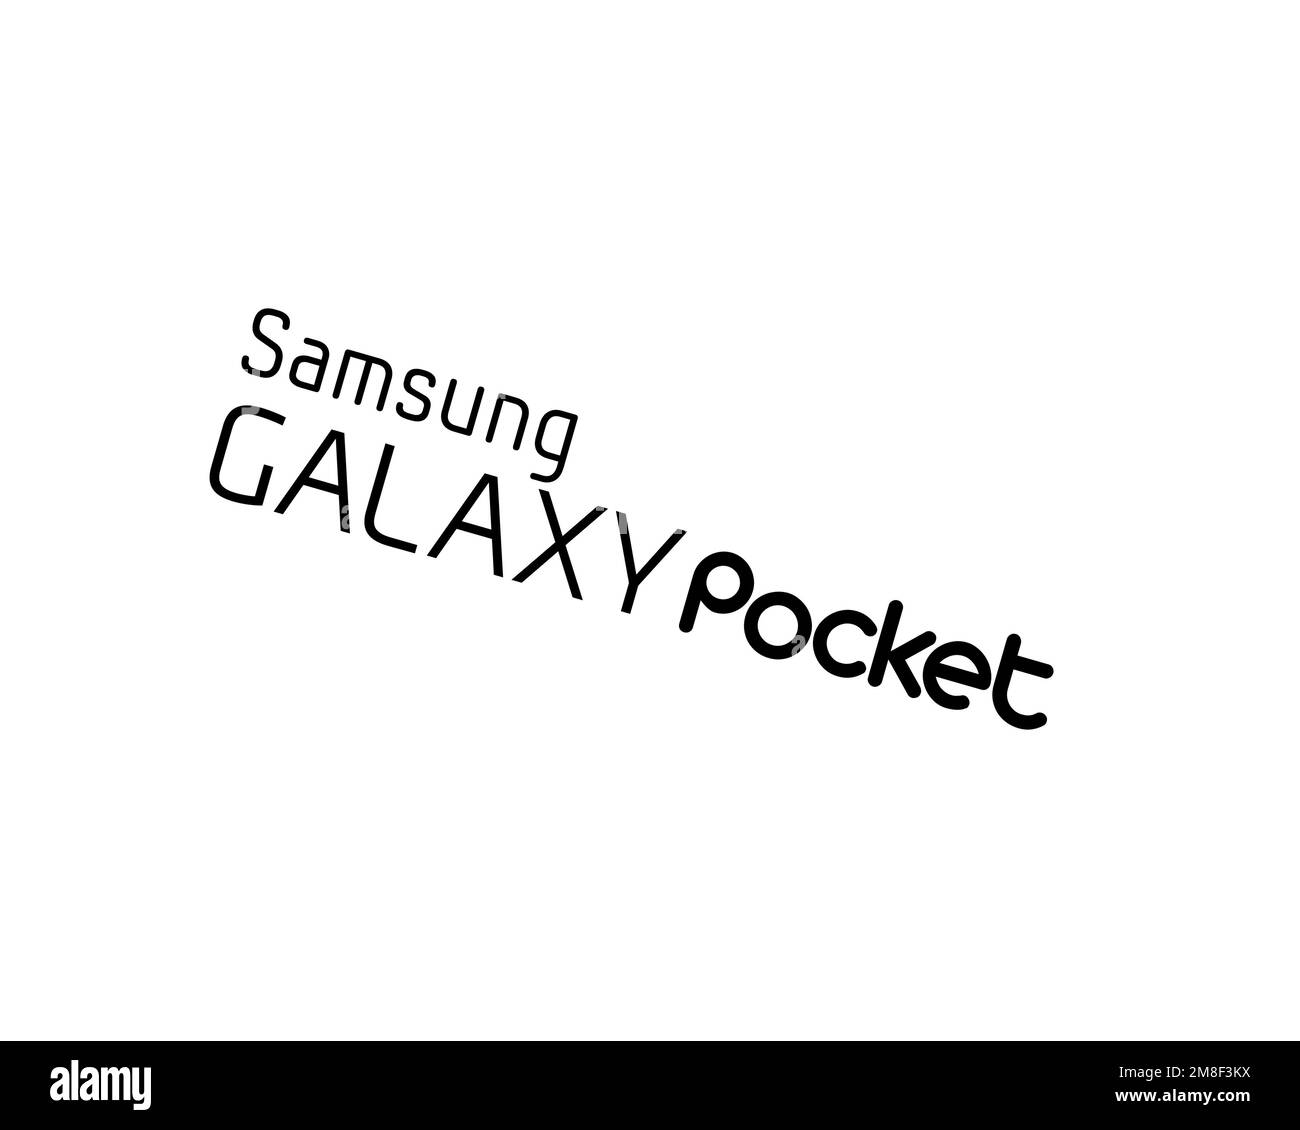 Samsung Galaxy Pocket, Rotated Logo, White Background B Stock Photo